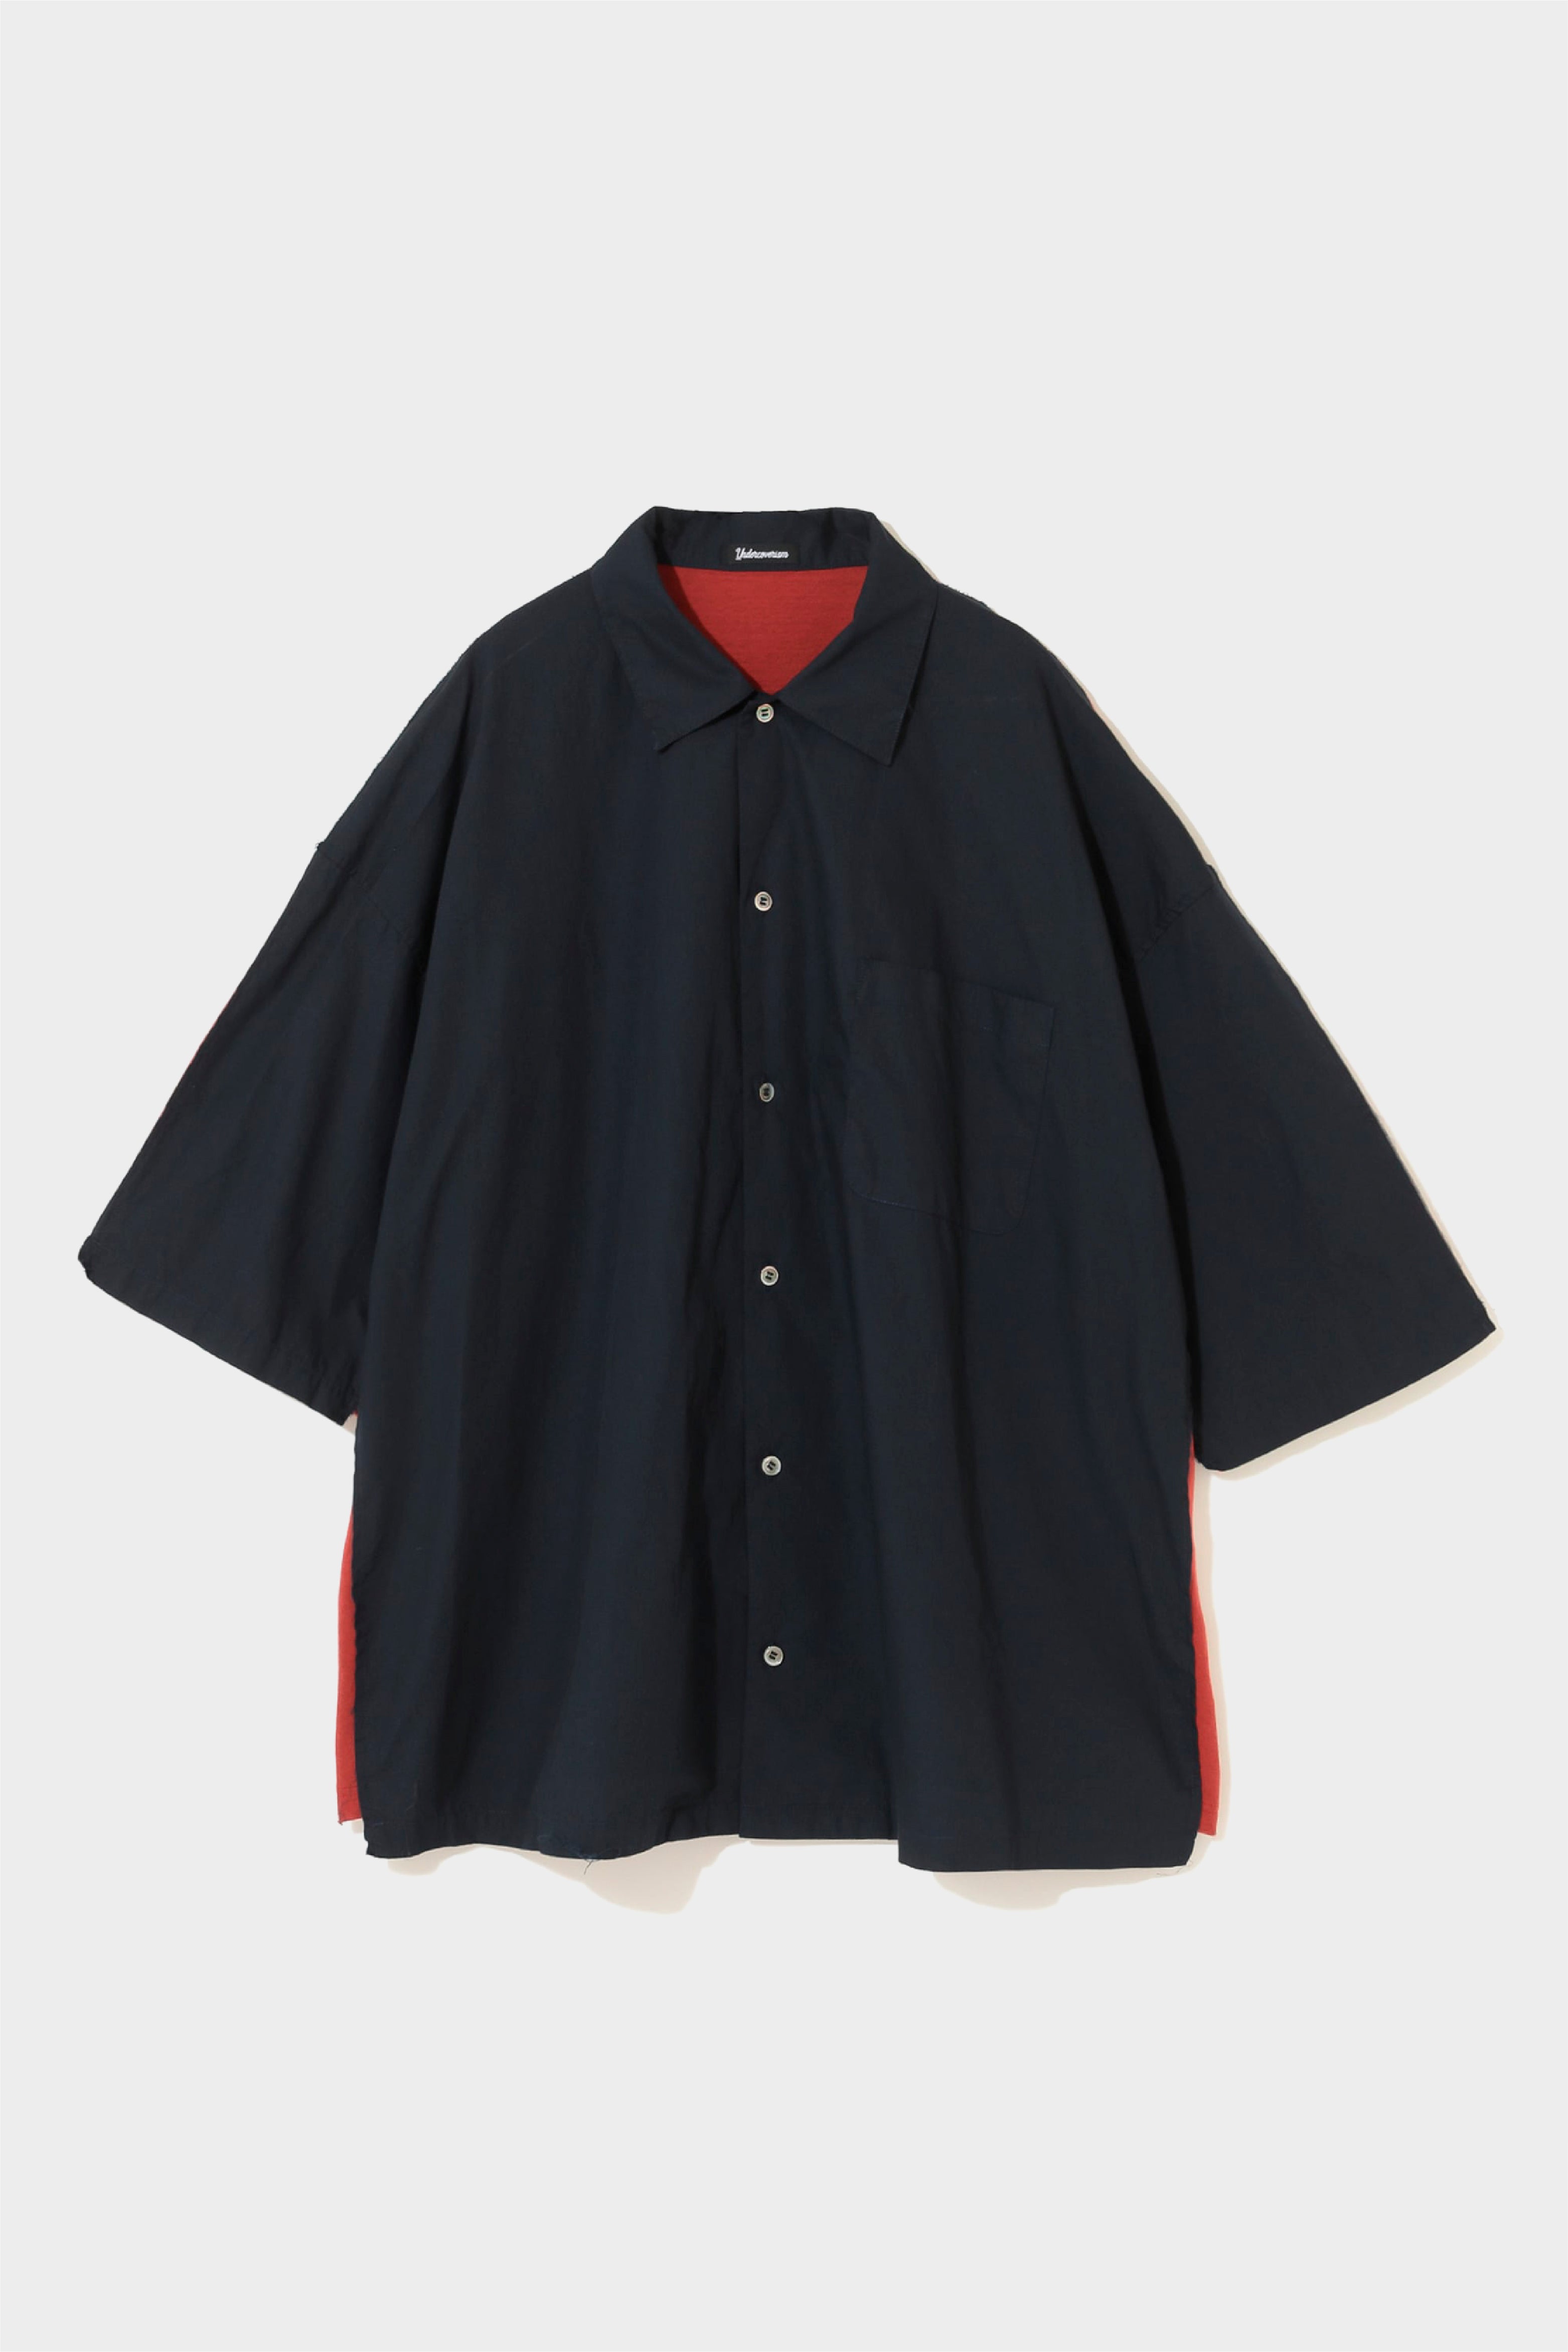 Selectshop FRAME - UNDERCOVERISM Shirts Shirts Dubai